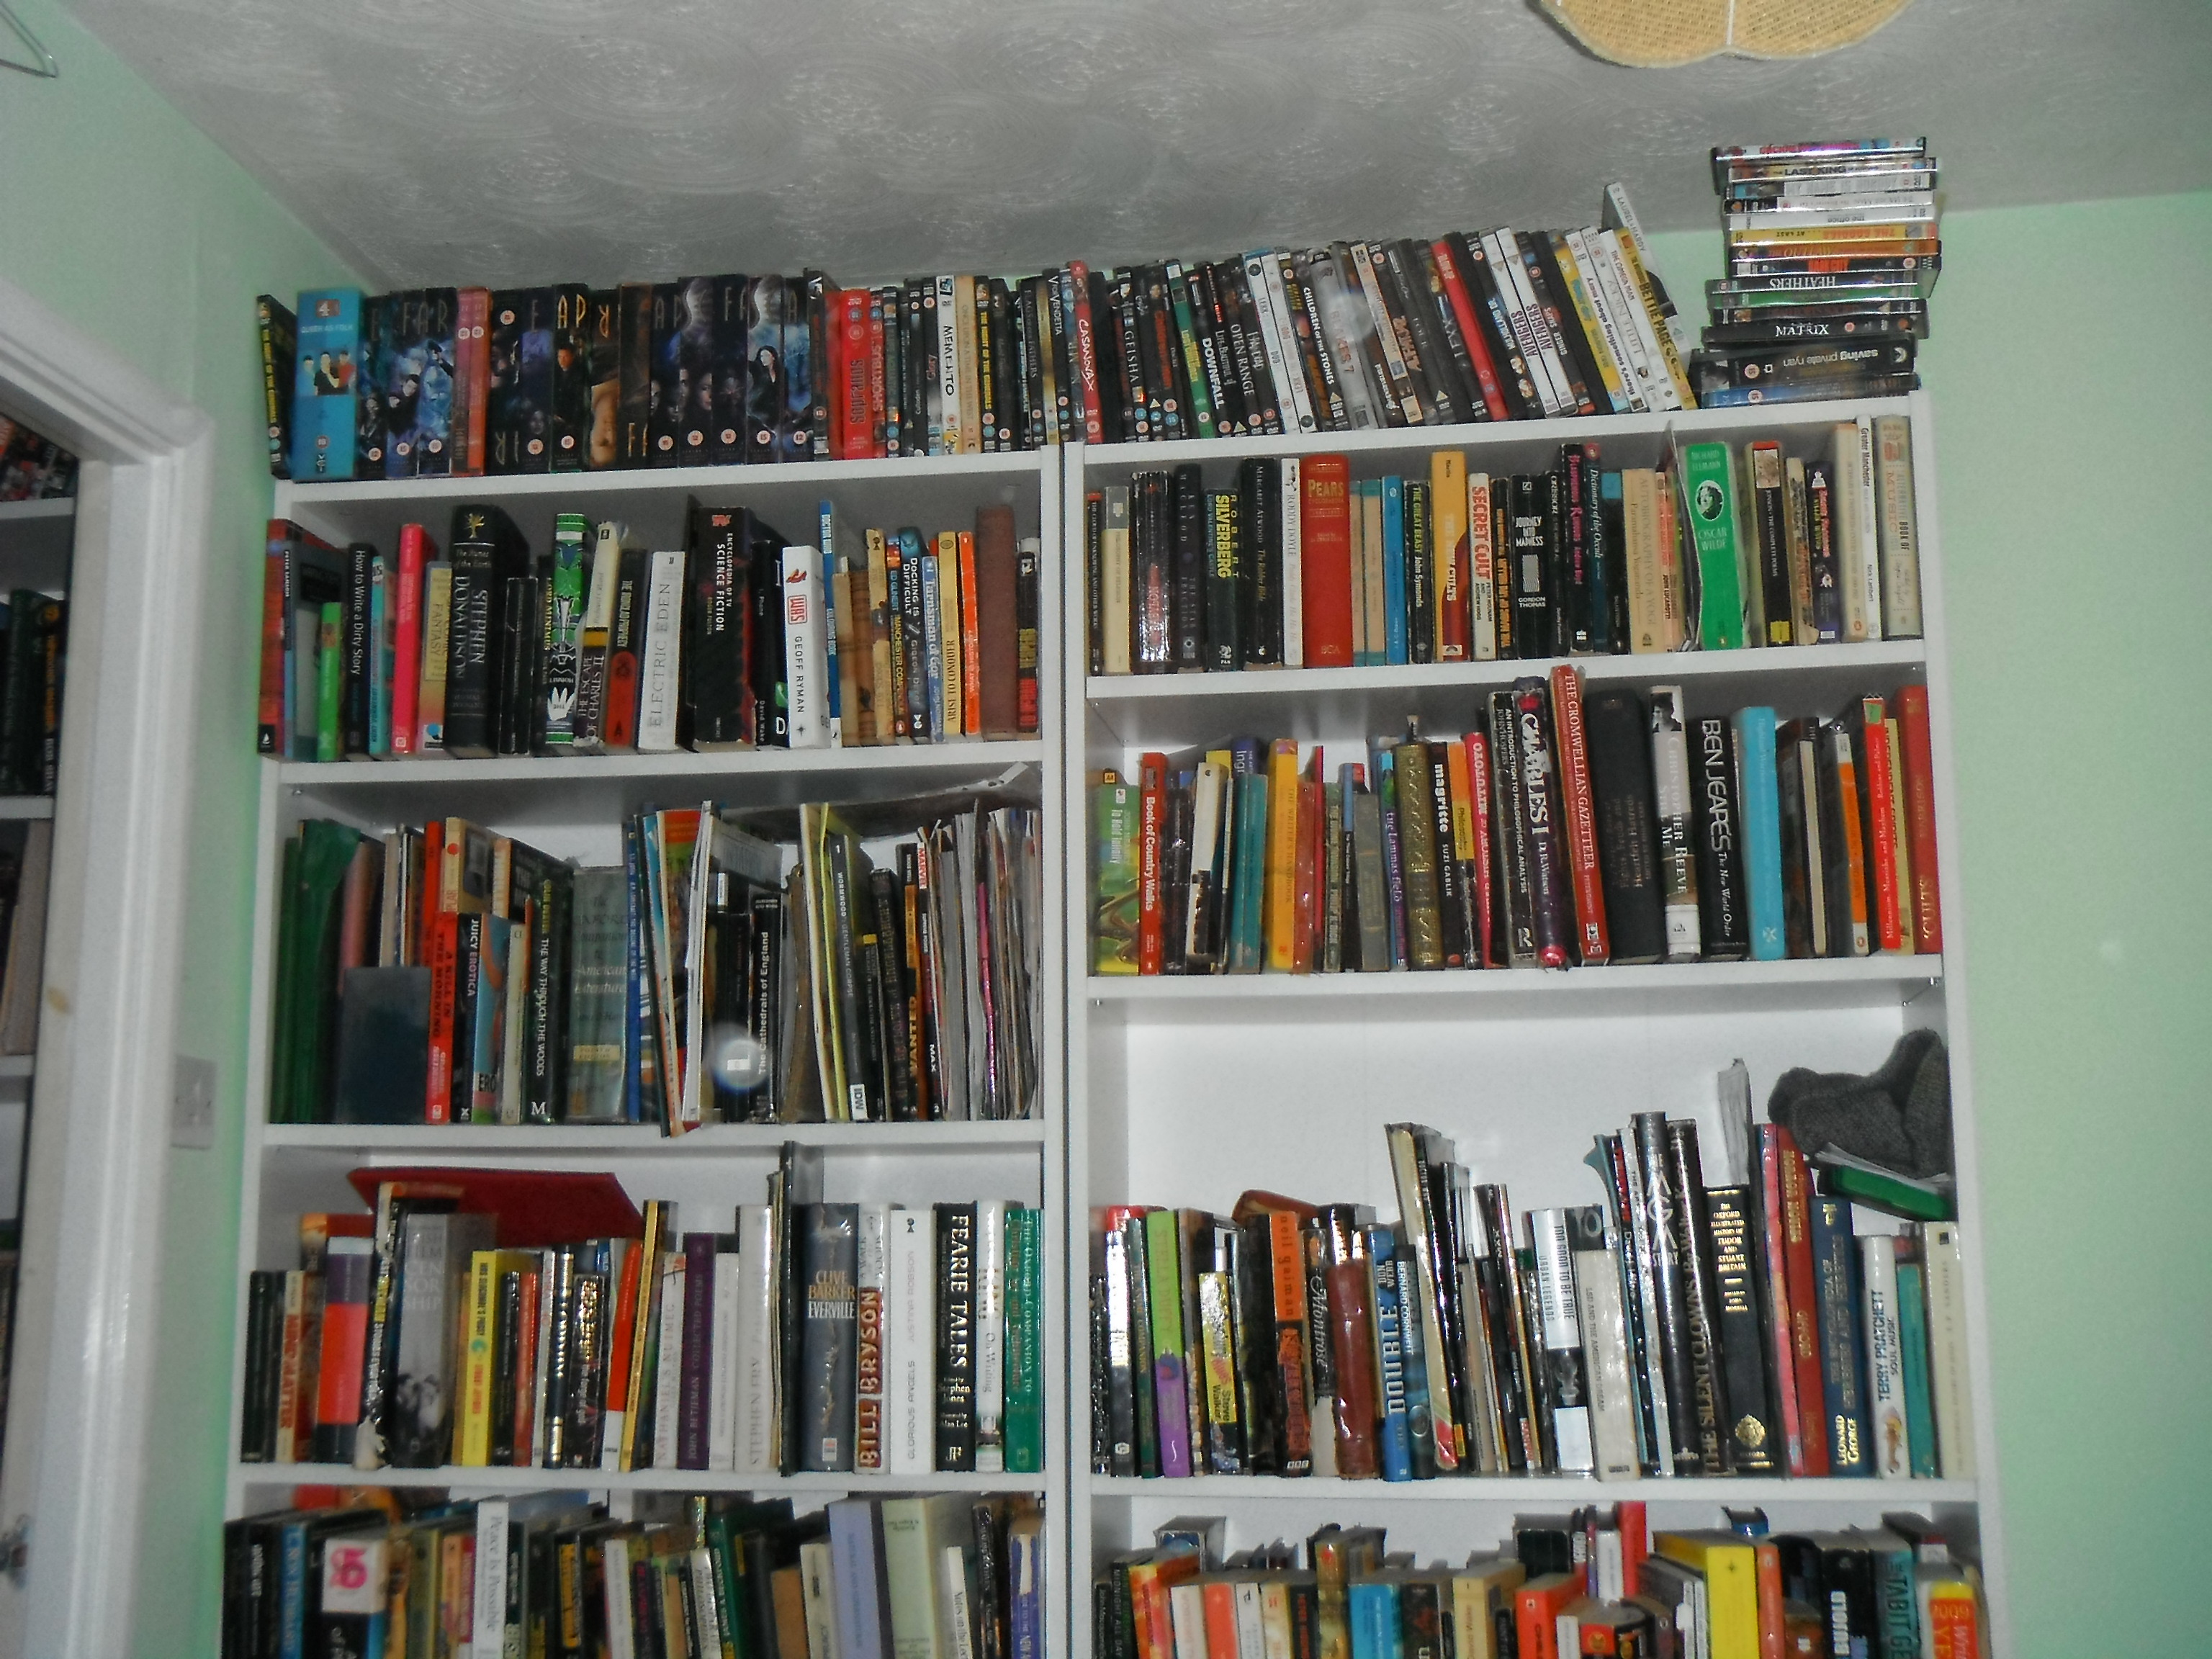 Photo taken by me – my book shelves.